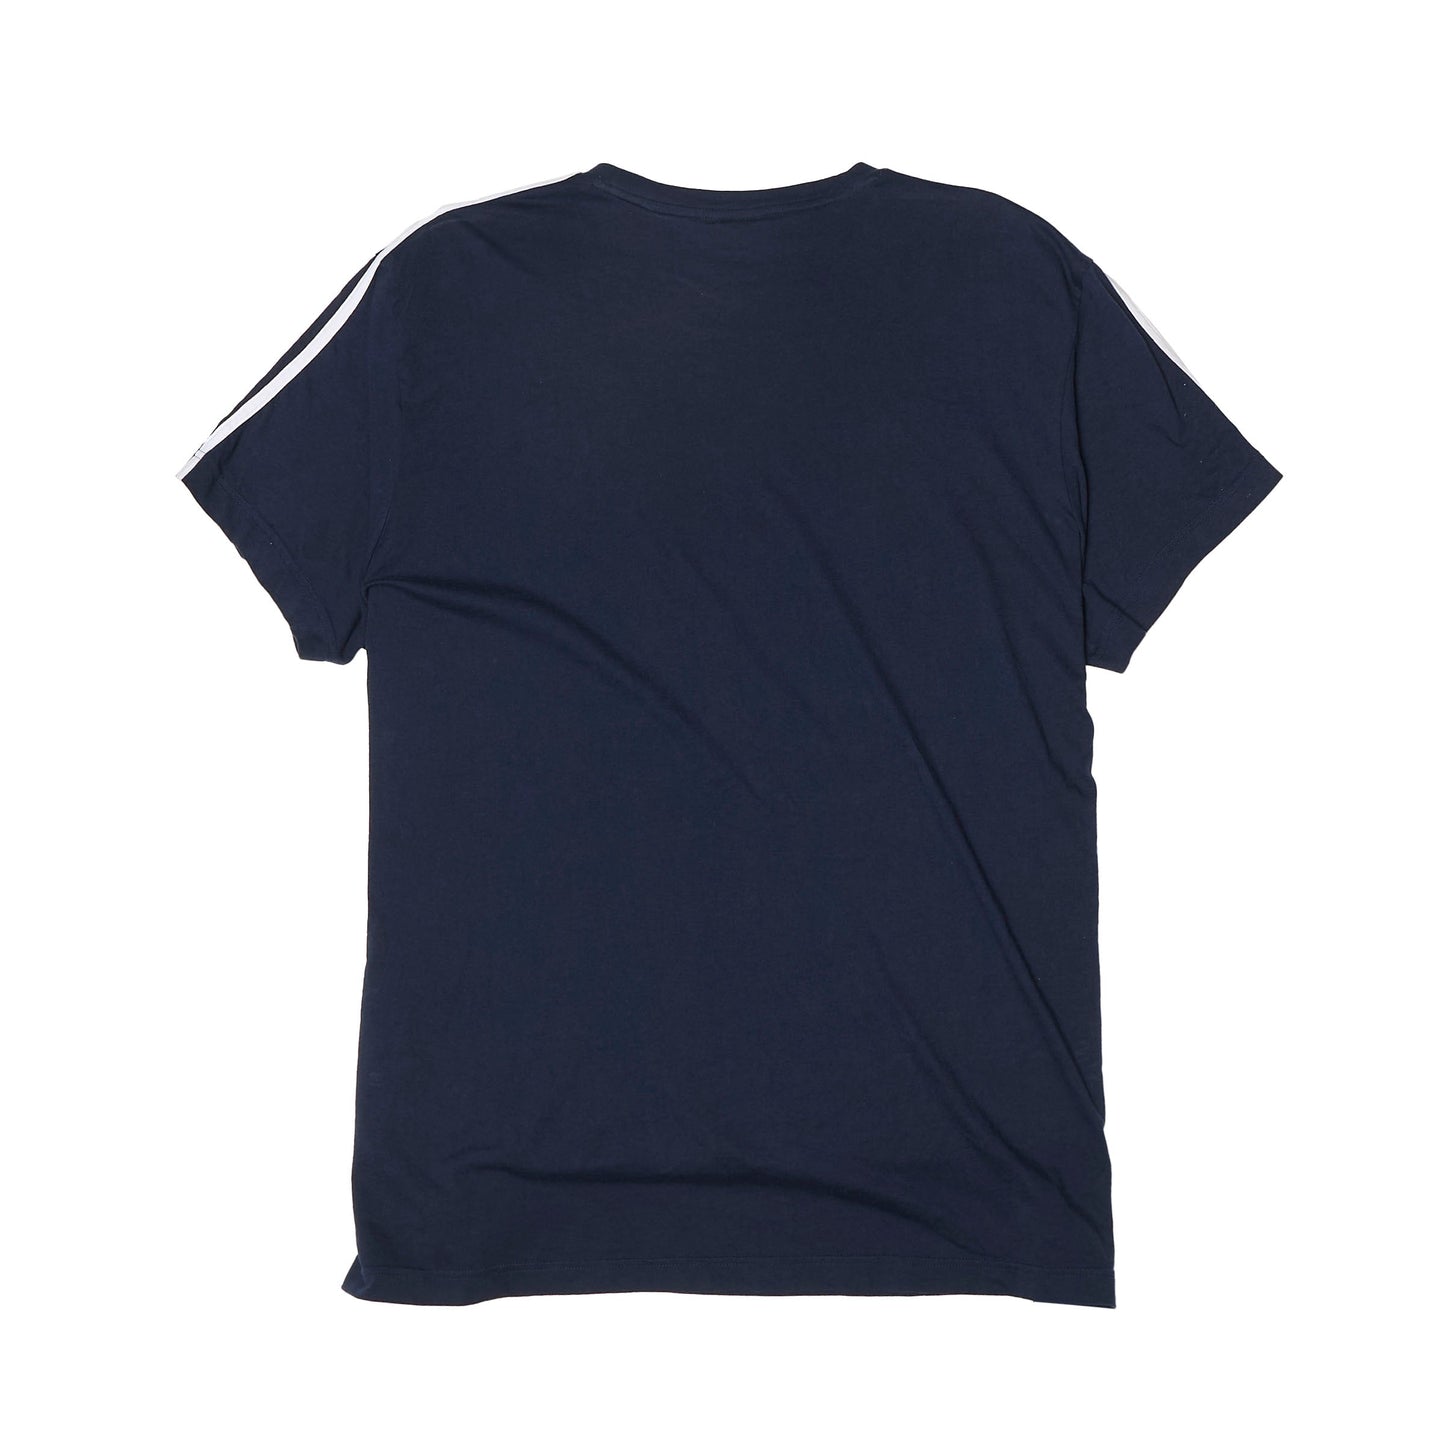 Adidas T-shirt - XXL